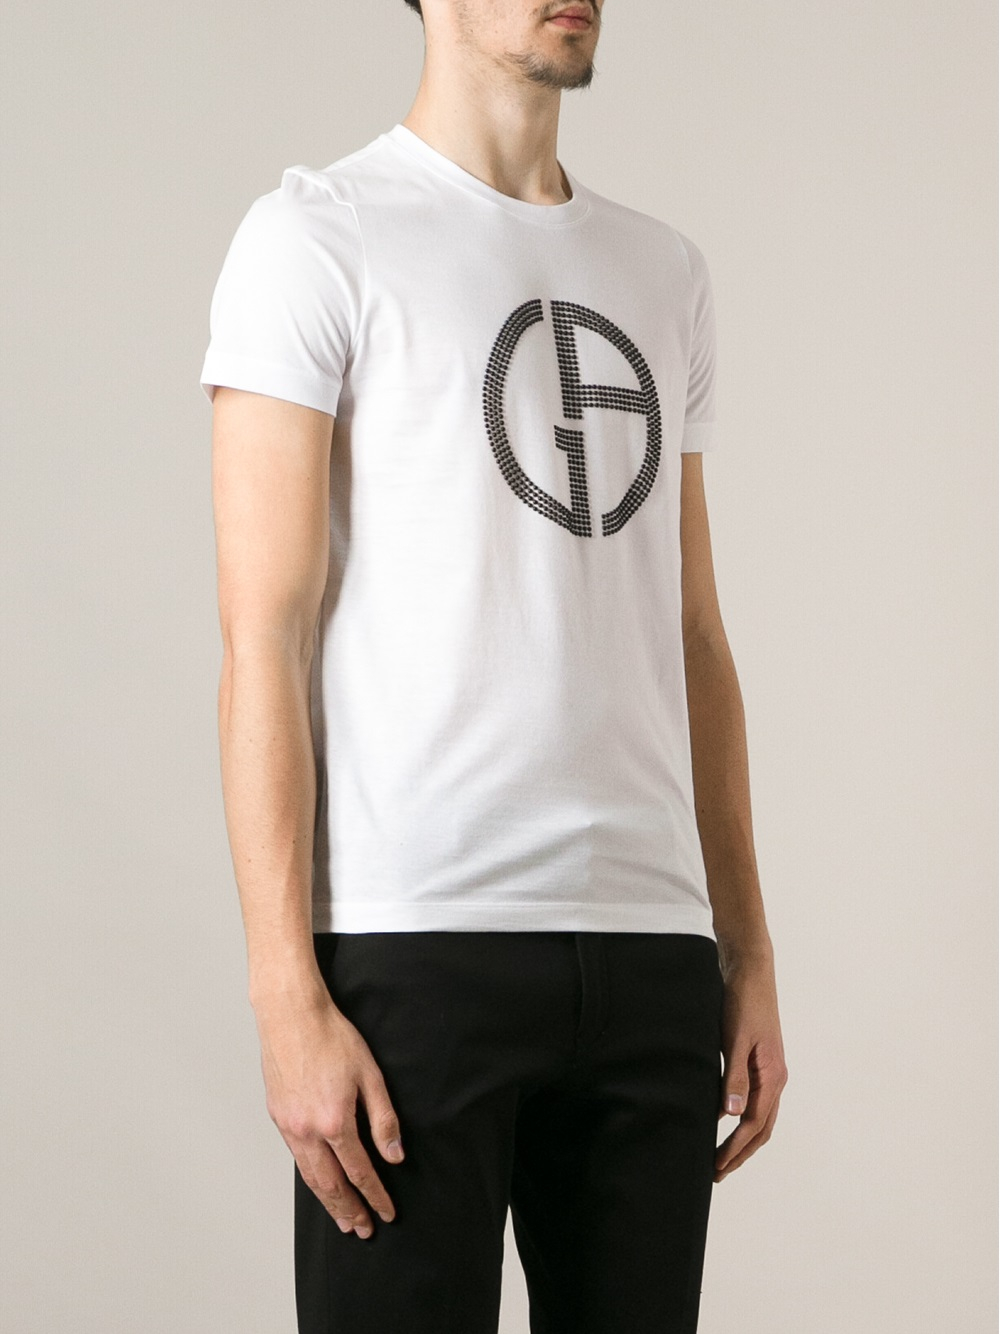 Giorgio Armani Logo Tshirt in White for Men - Lyst